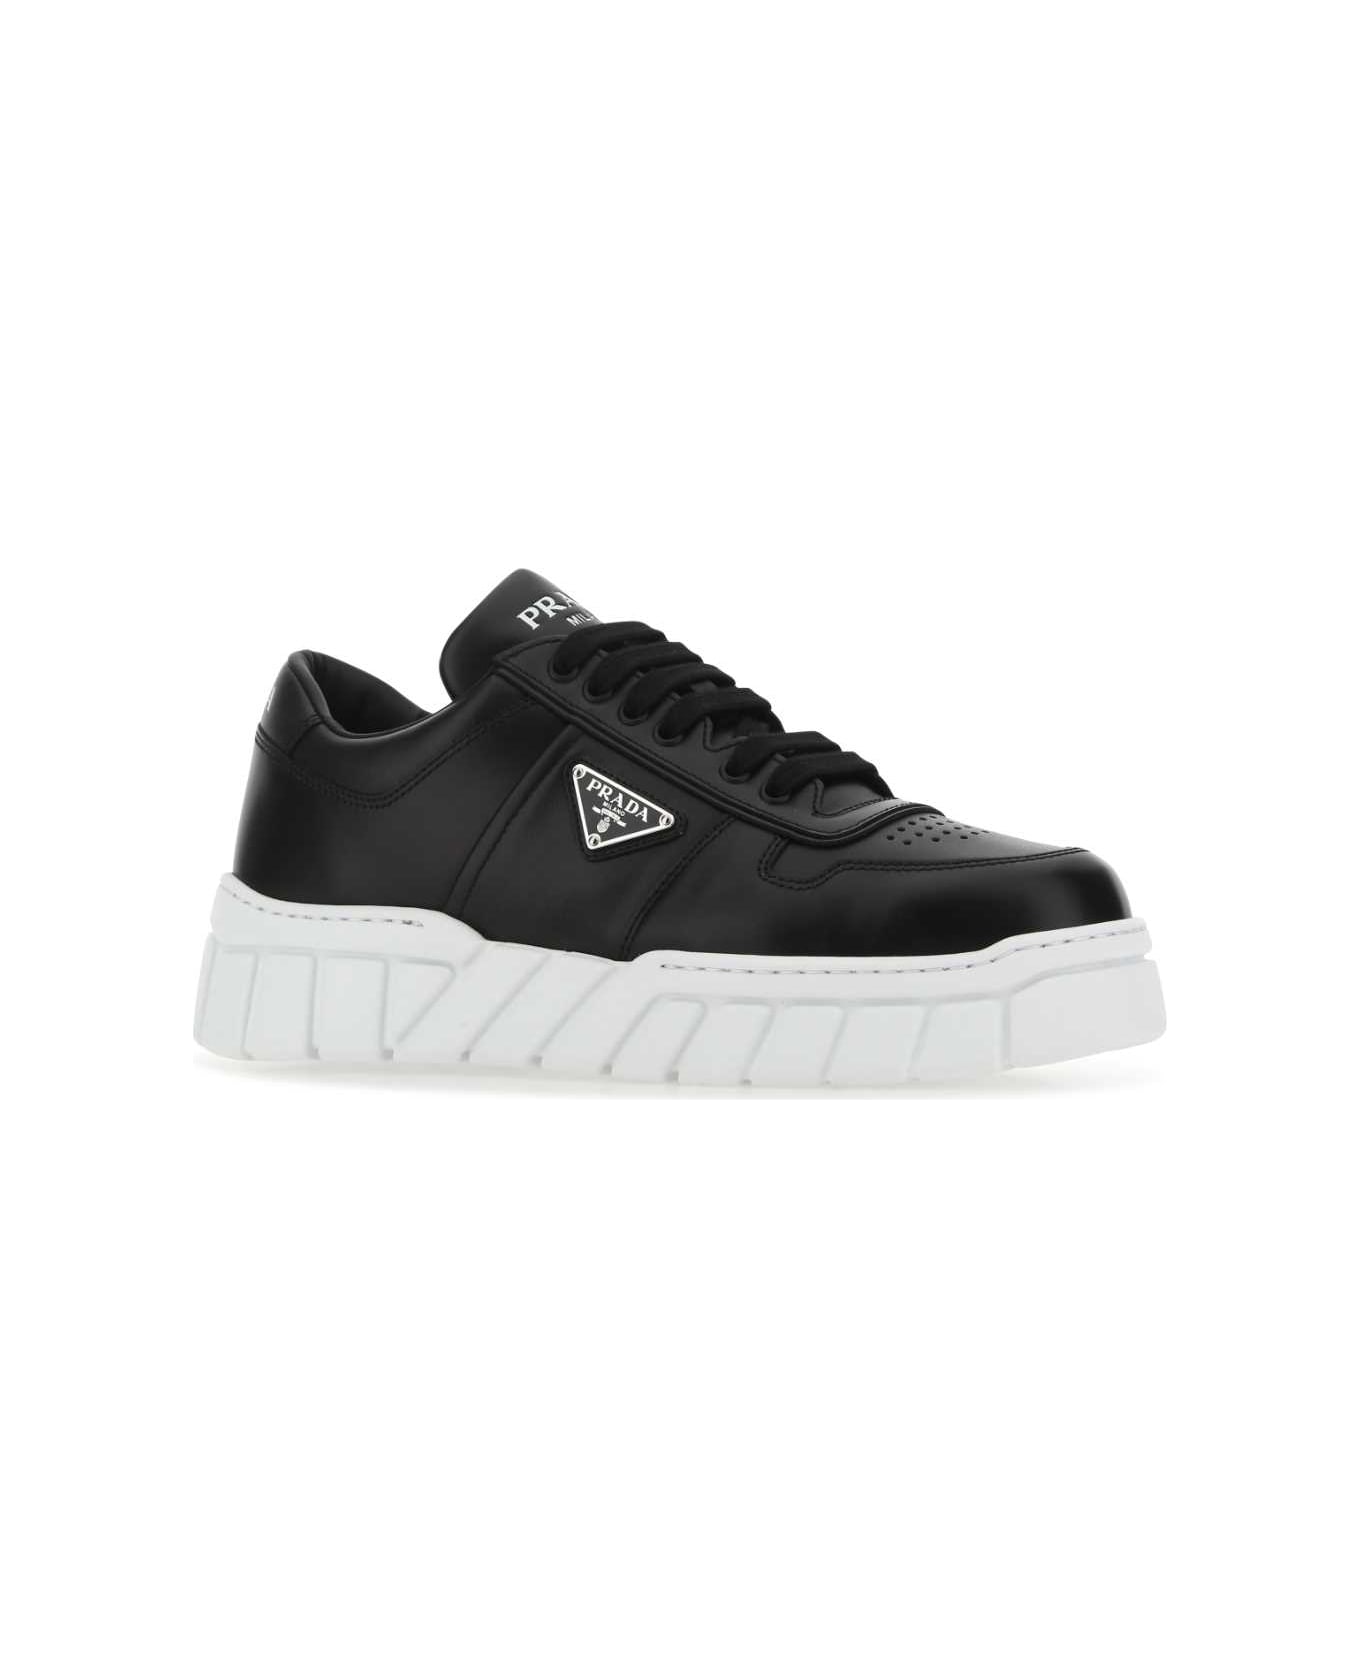 Prada Black Leather Sneakers - F0632